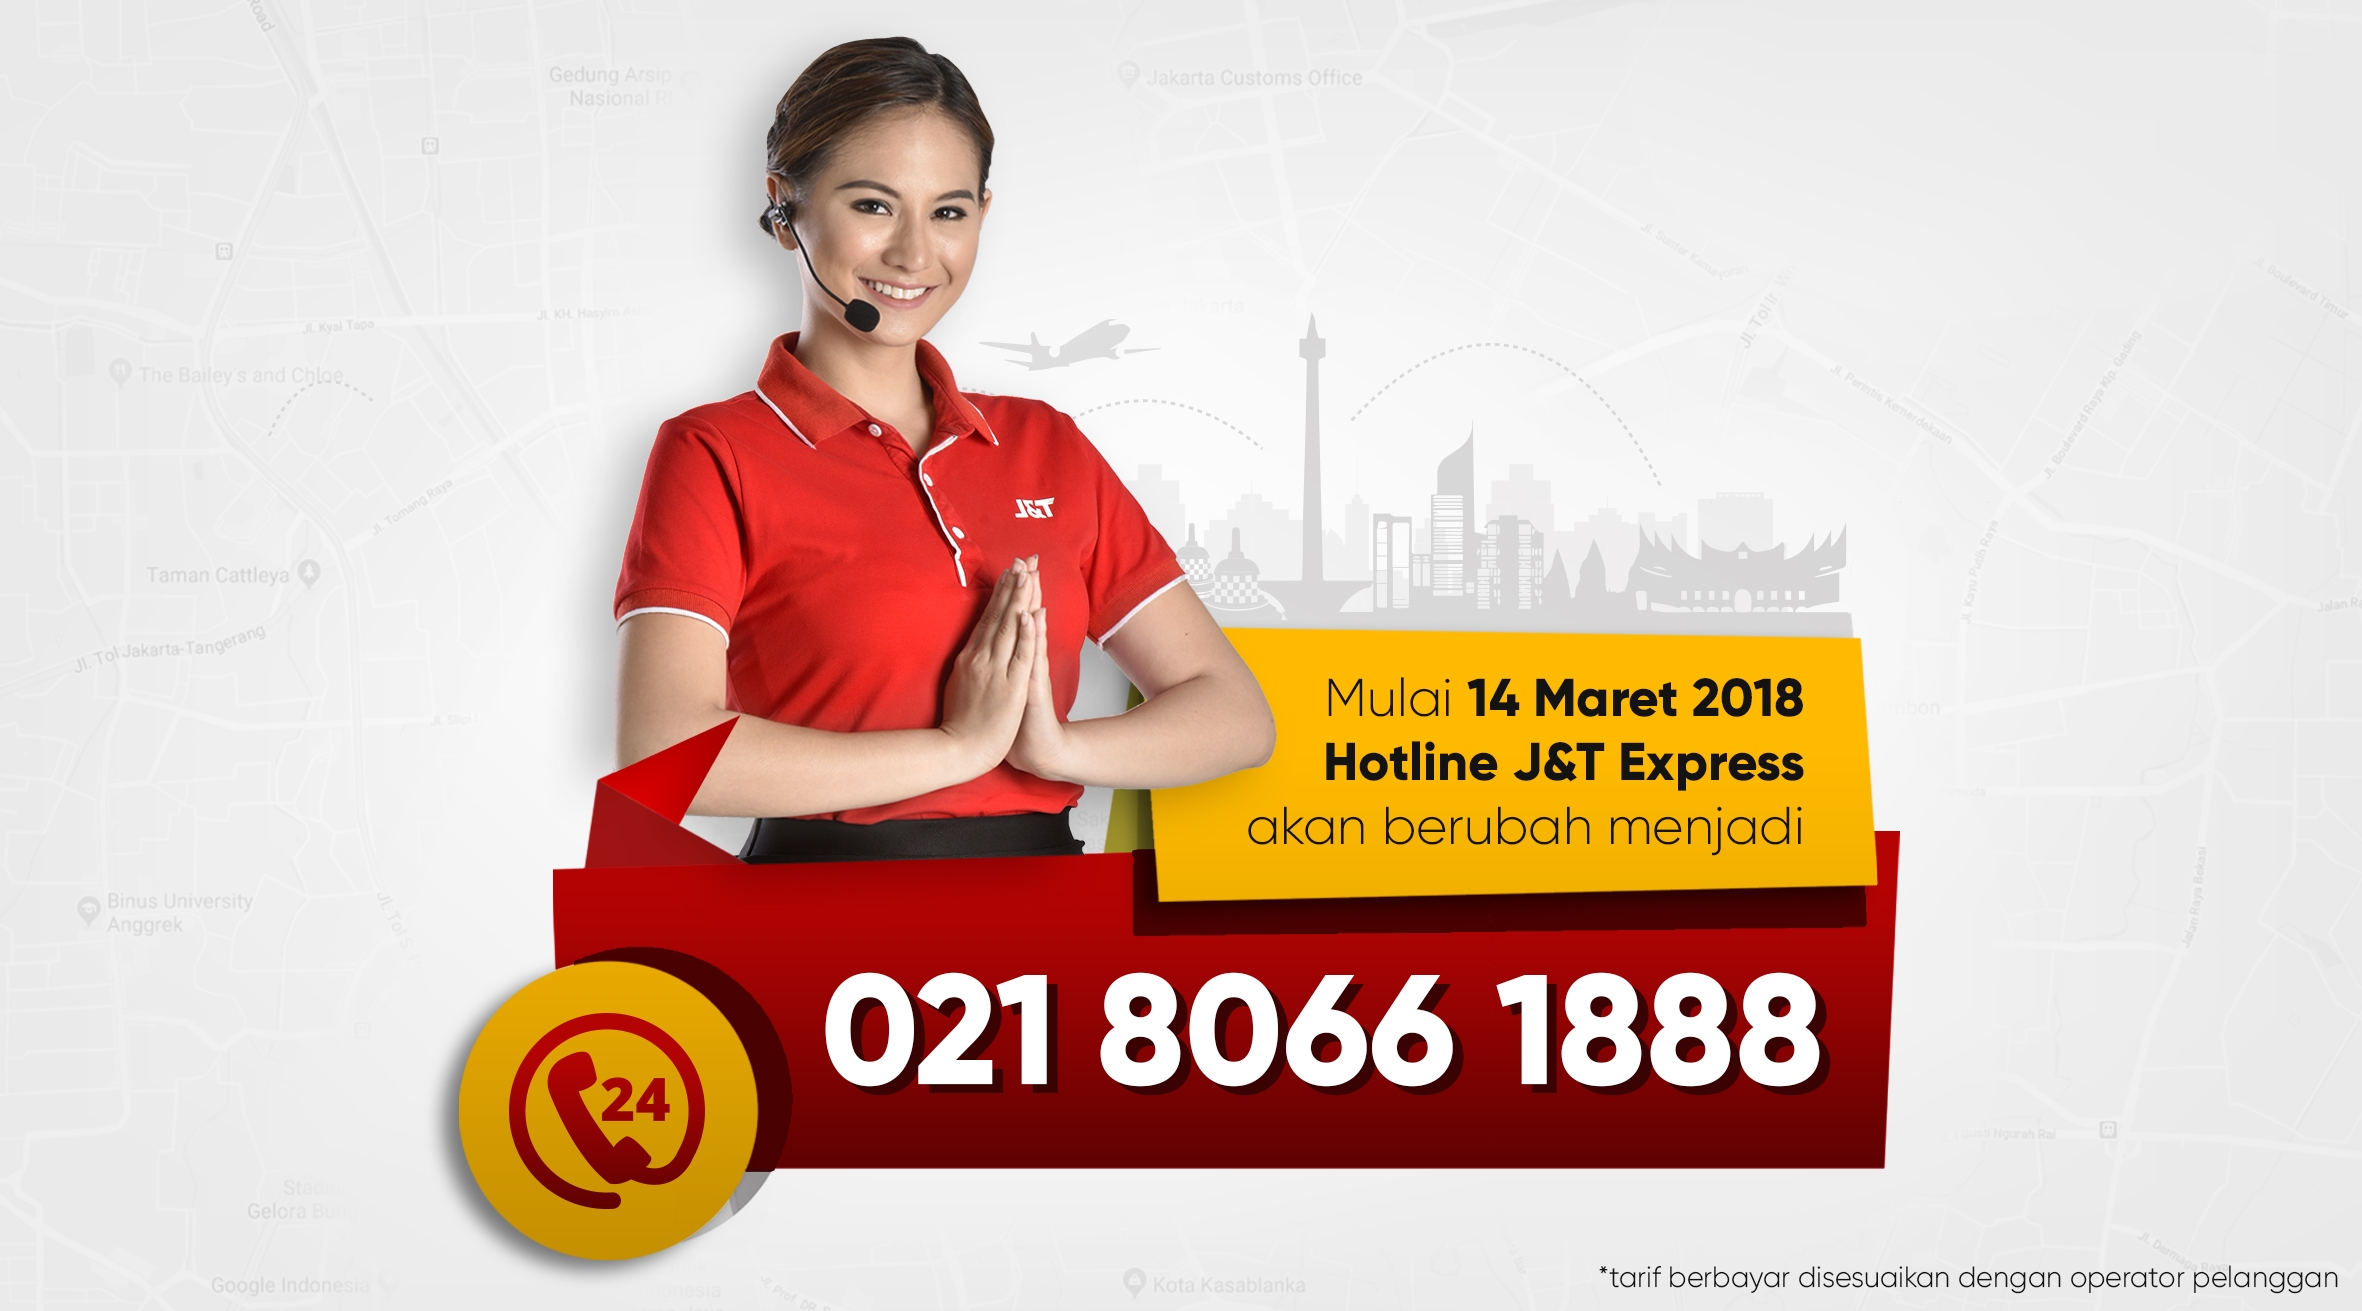 Pengumuman Perubahan Nomor Hotline J&T Express